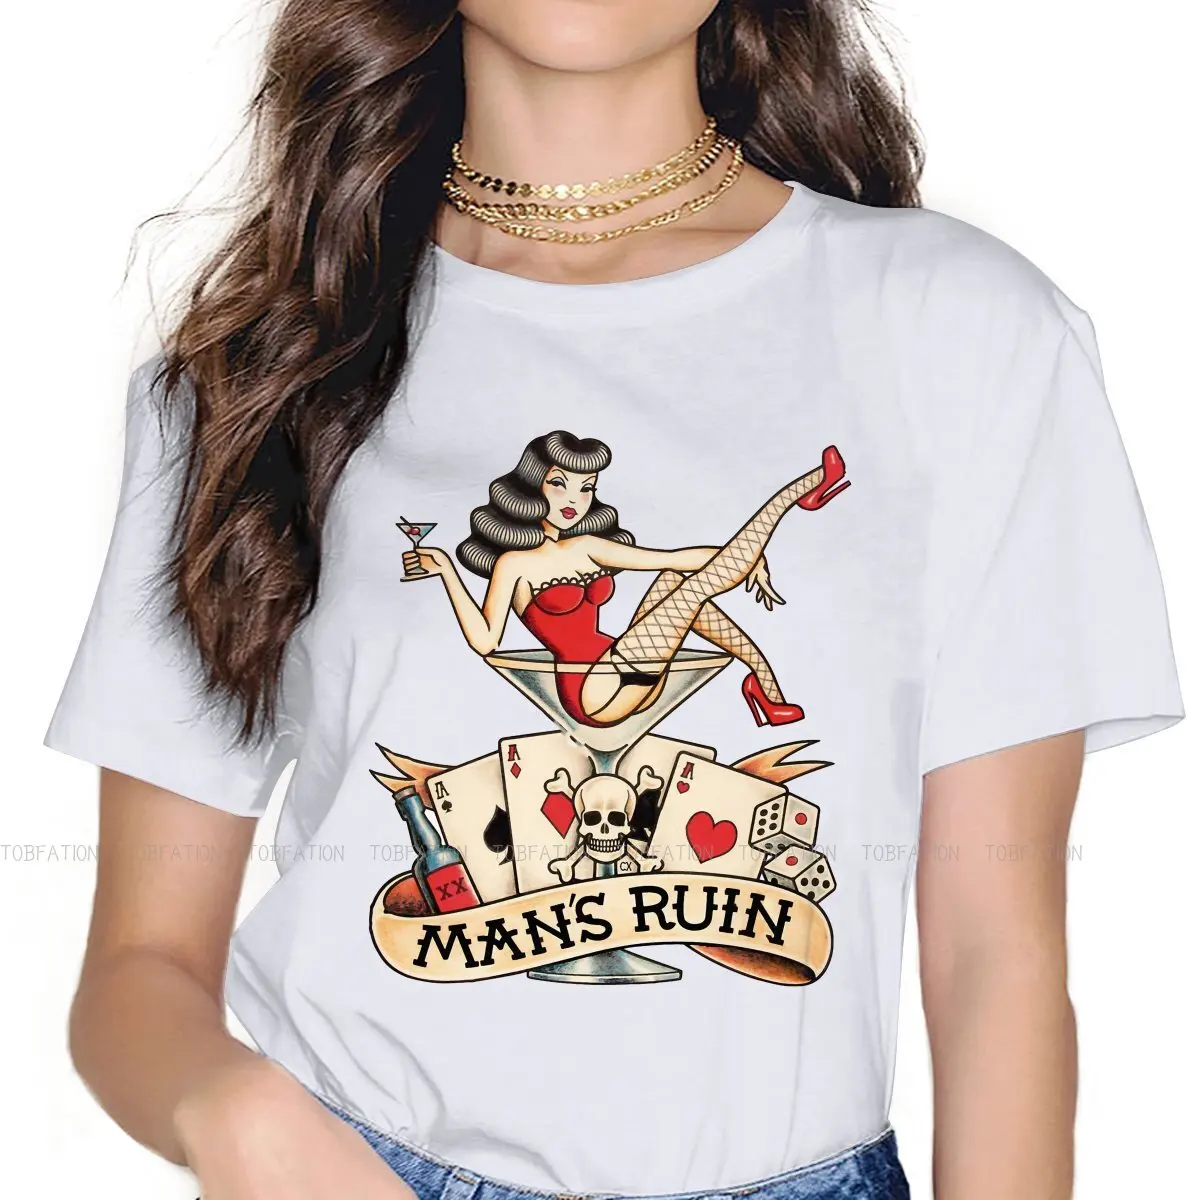 Camiseta de Martini Pin Up para niÃ±a y mujer, Blusas Harajuku informales de manga corta Vintage, Tops de gran tamaÃ±o